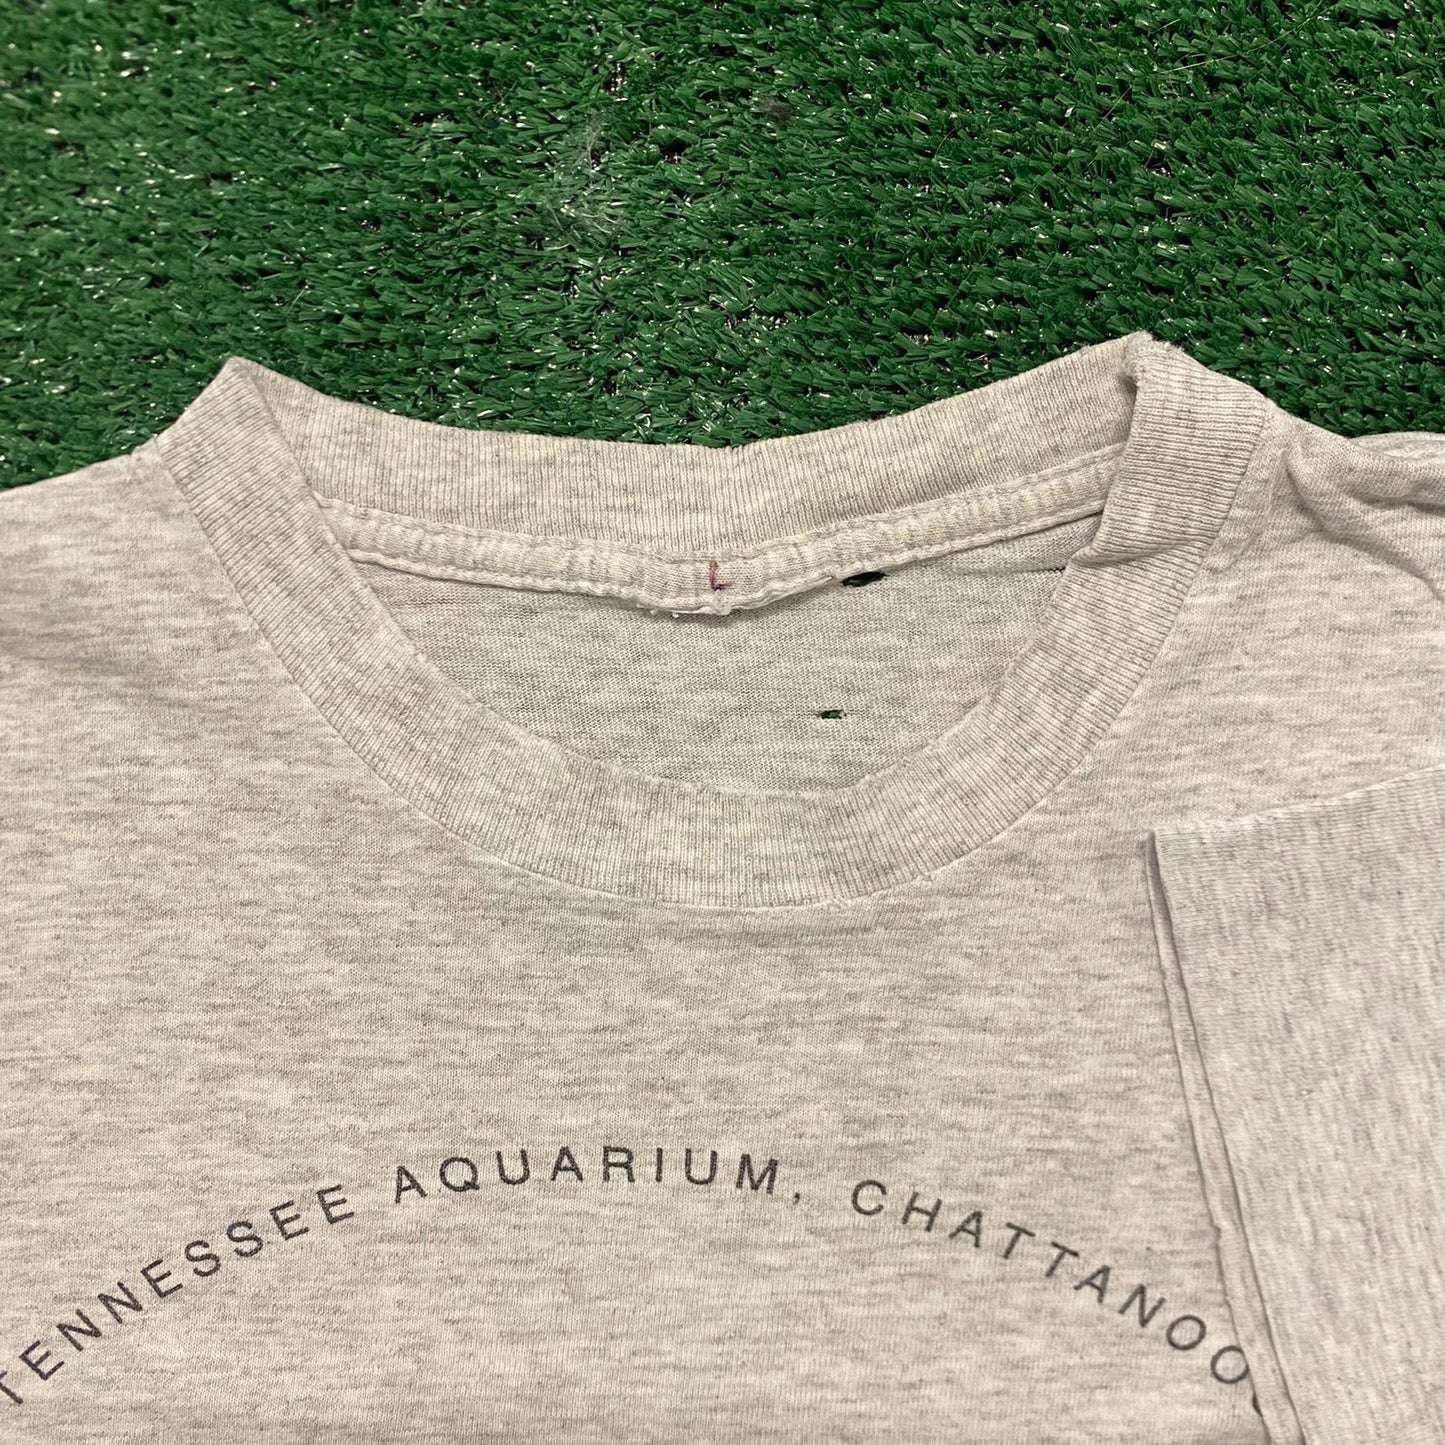 Vintage 90s Tennessee Aquarium Single Stitch T-Shirt